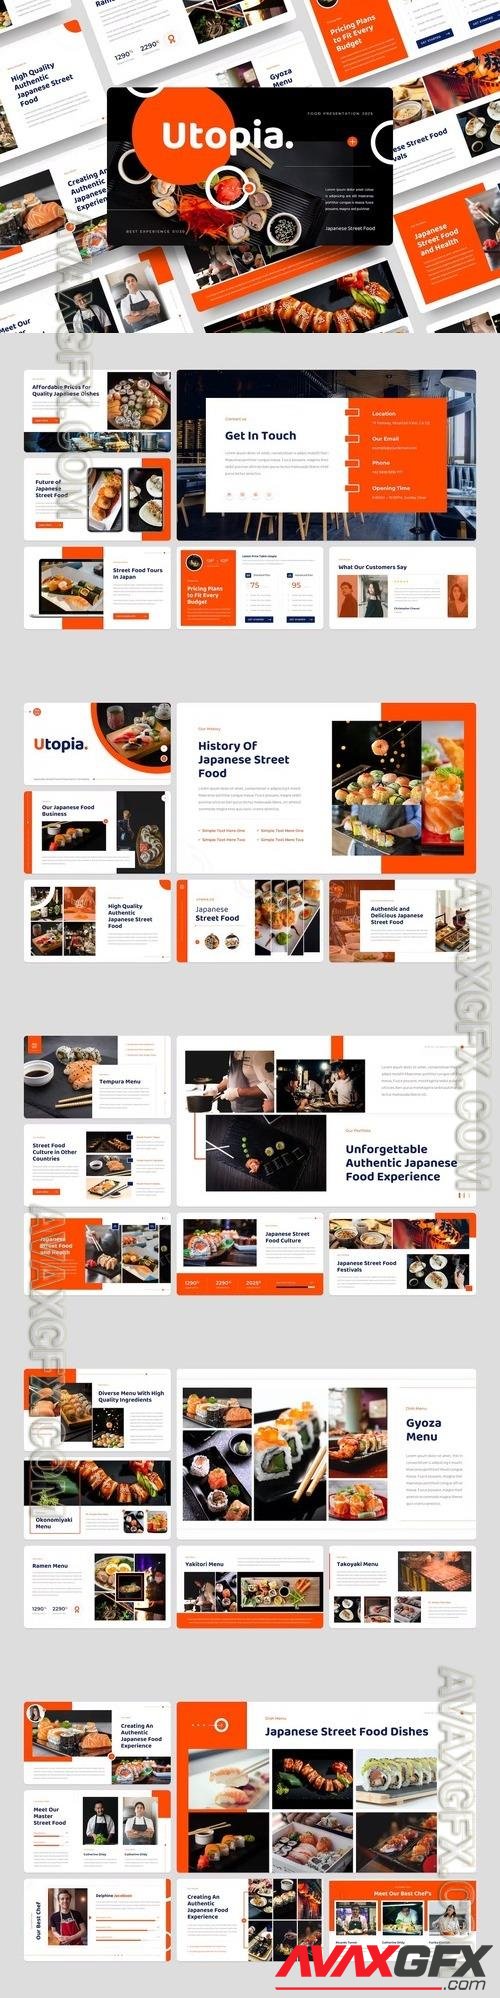 Japanese Street Food PowerPoint Template [PPTX]